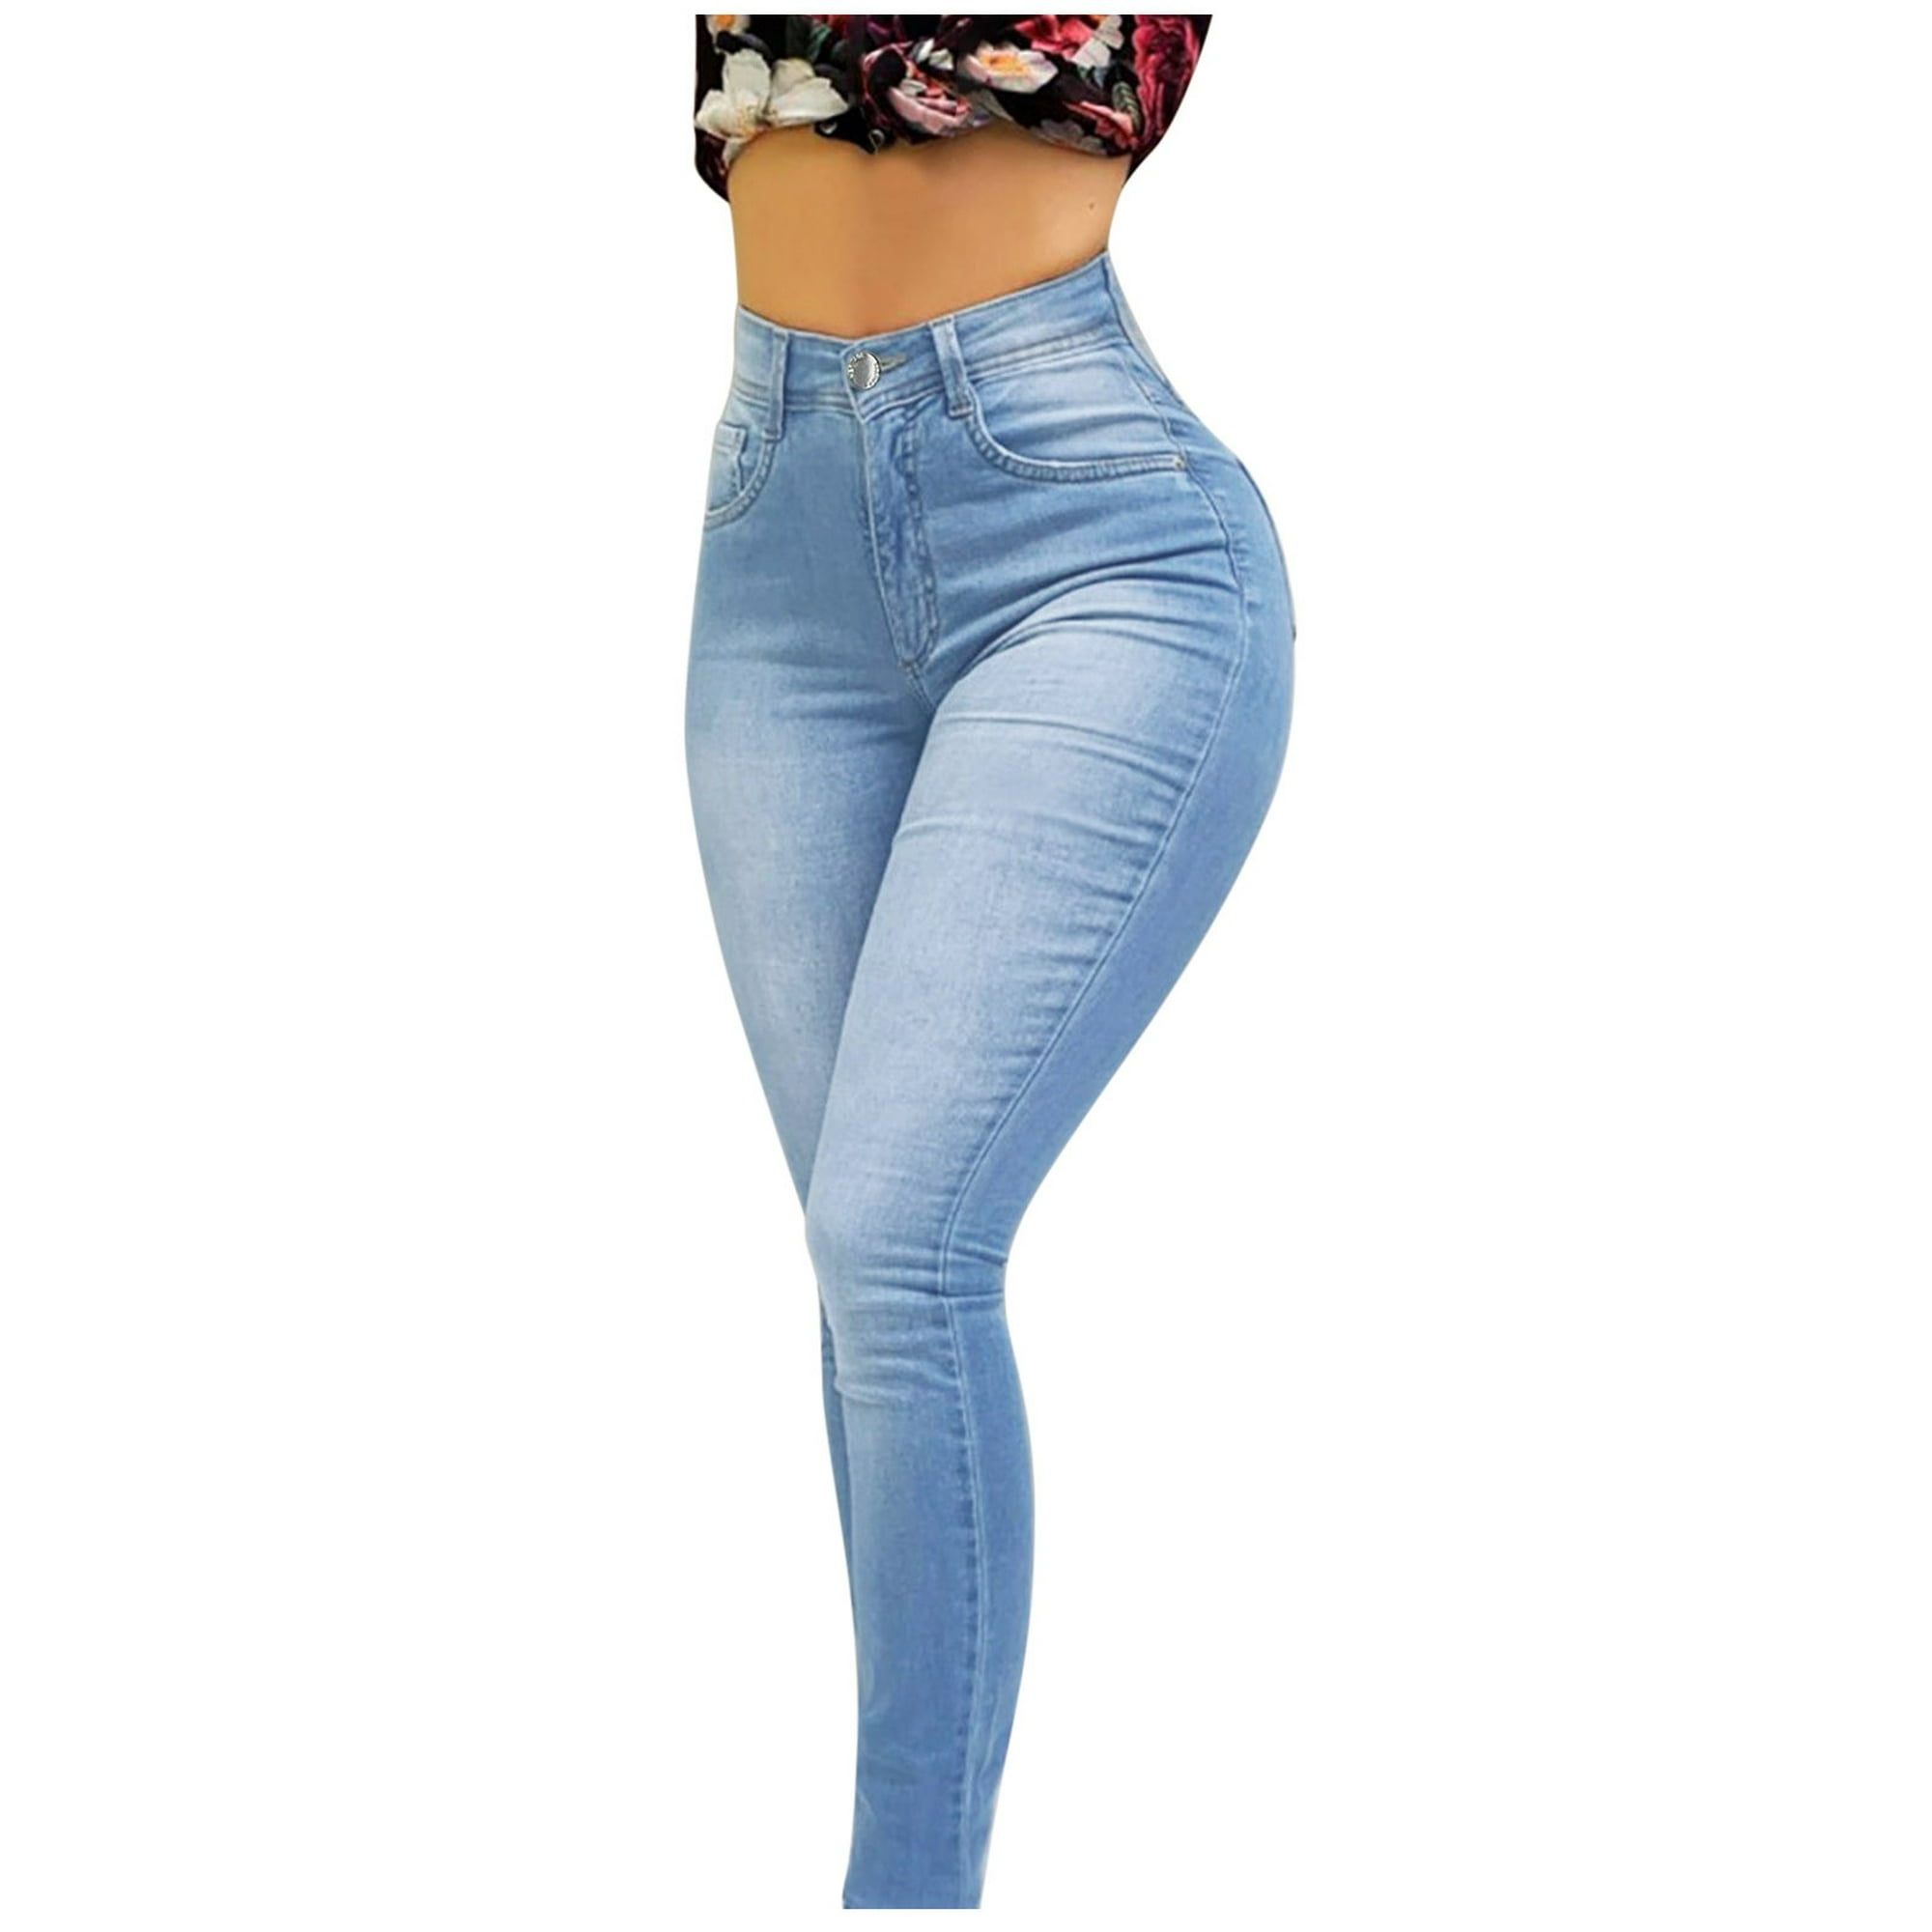 Gibobby Jeans dama cintura alta Pantalones vaqueros clásicos para mujer  Pantalones de lápiz de mezclilla azul de cintura alta delgados ocasionales  Pantalones(Azul claro,G)